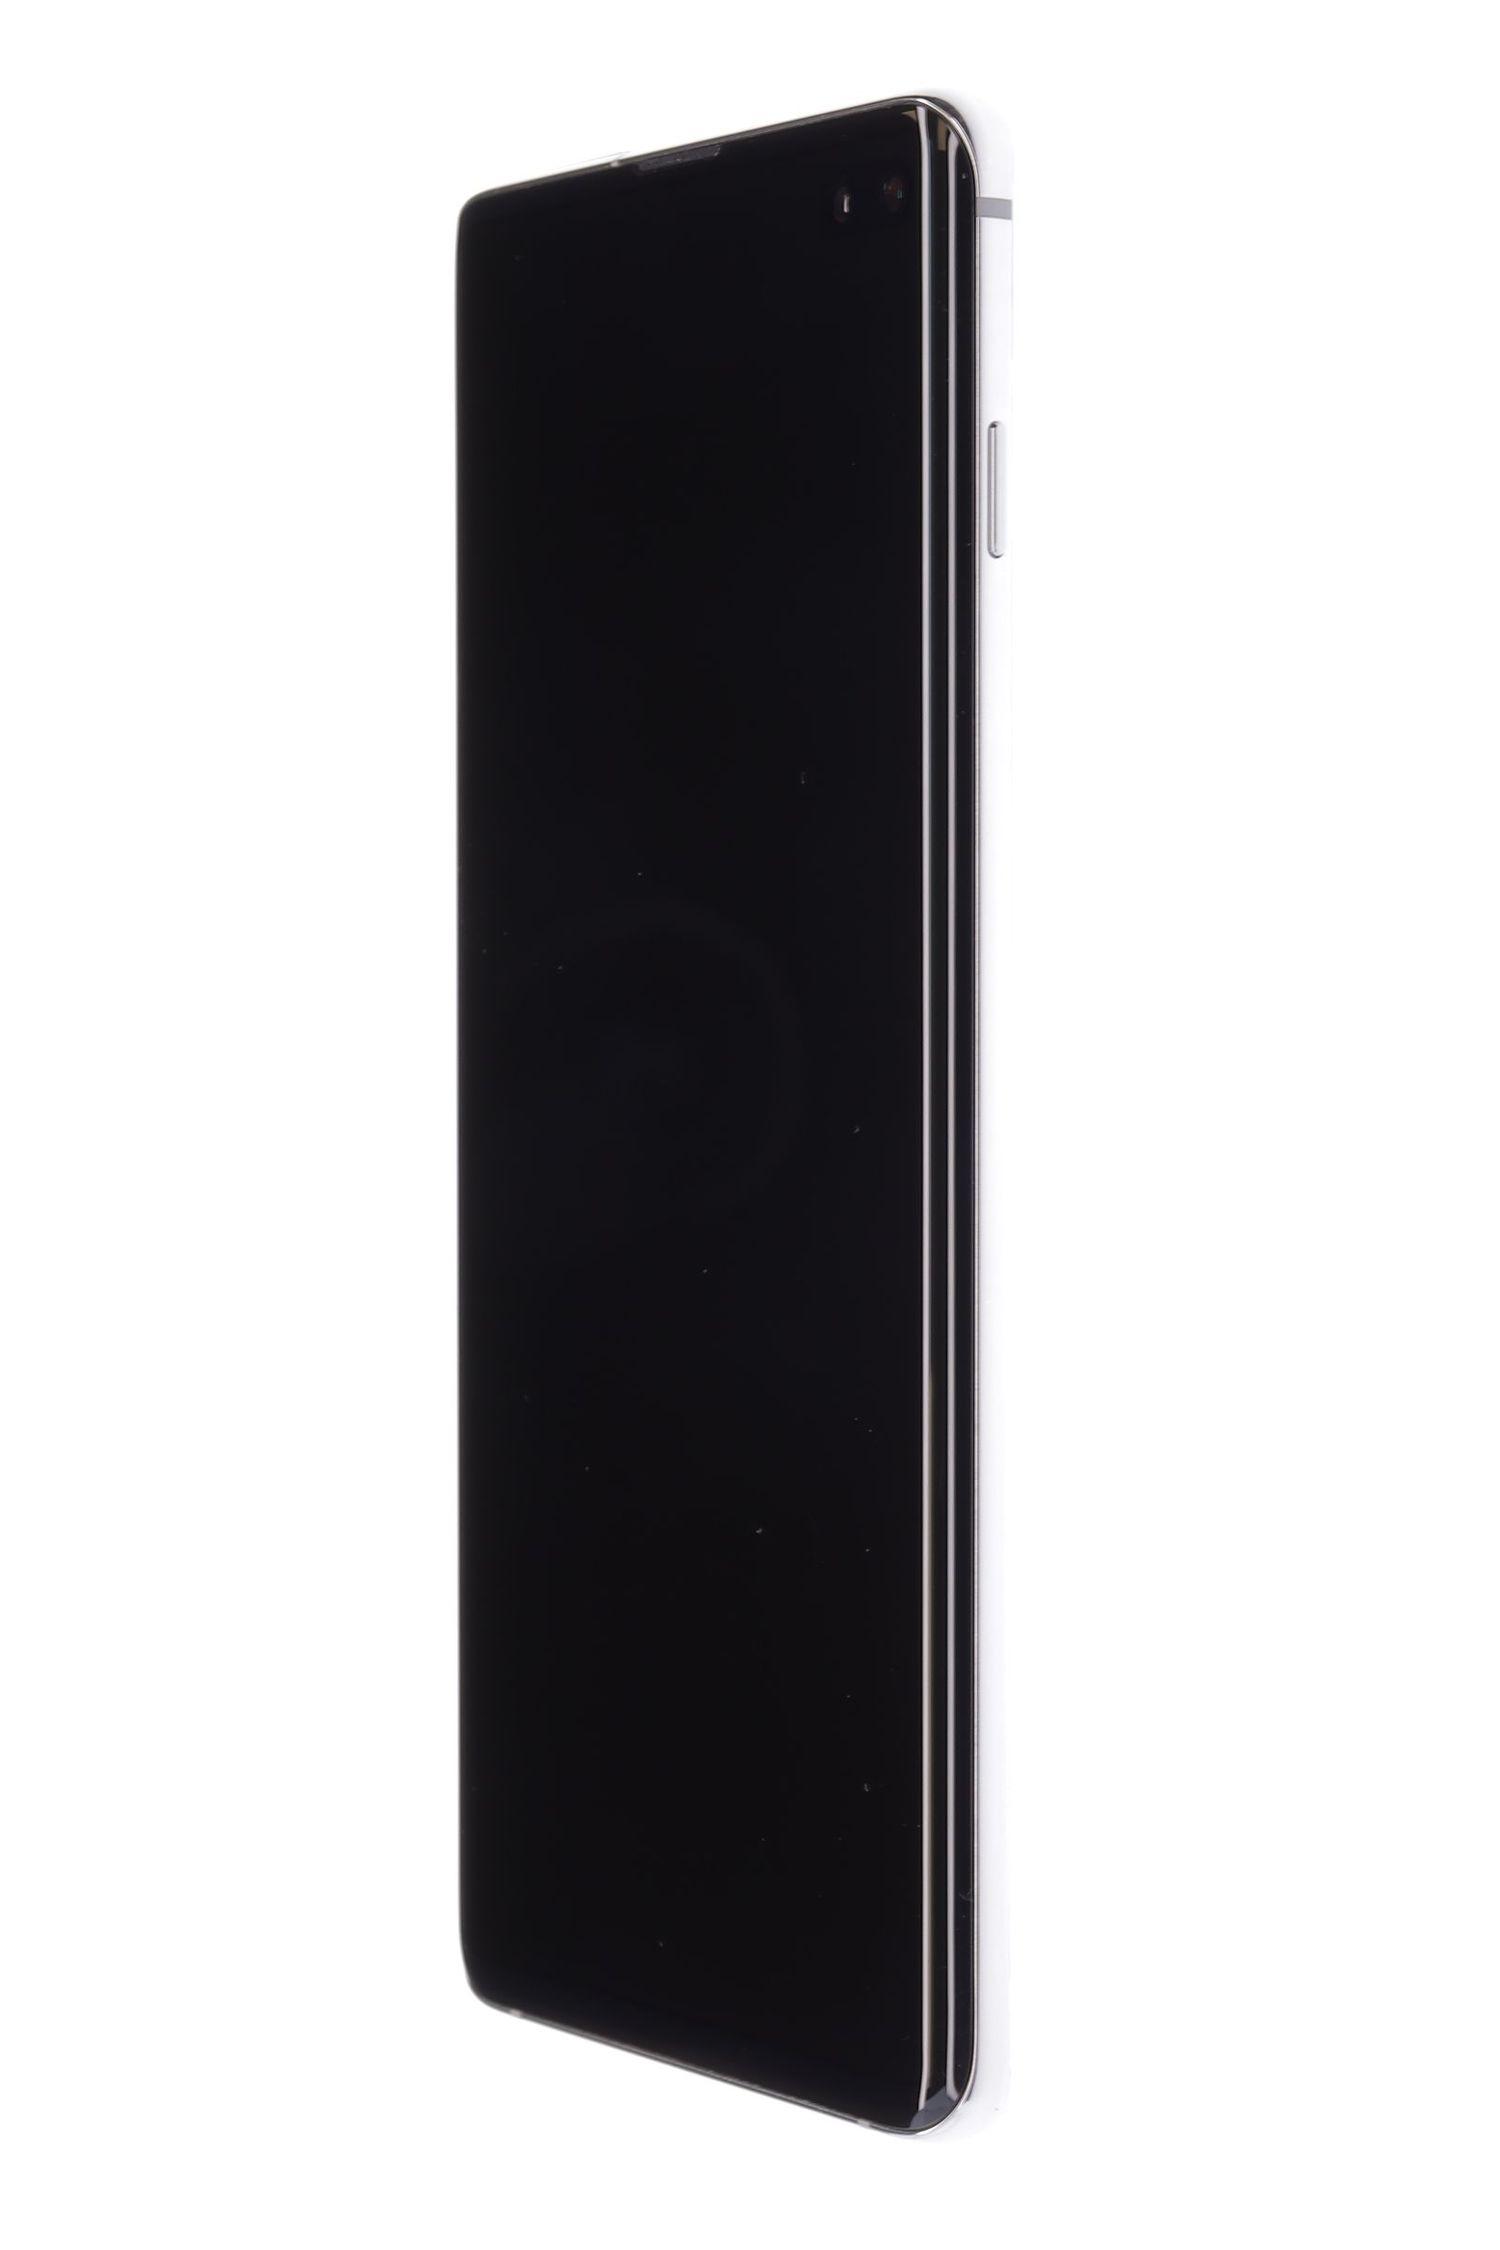 Мобилен телефон Samsung Galaxy S10 Plus Dual Sim, Prism White, 128 GB, Foarte Bun